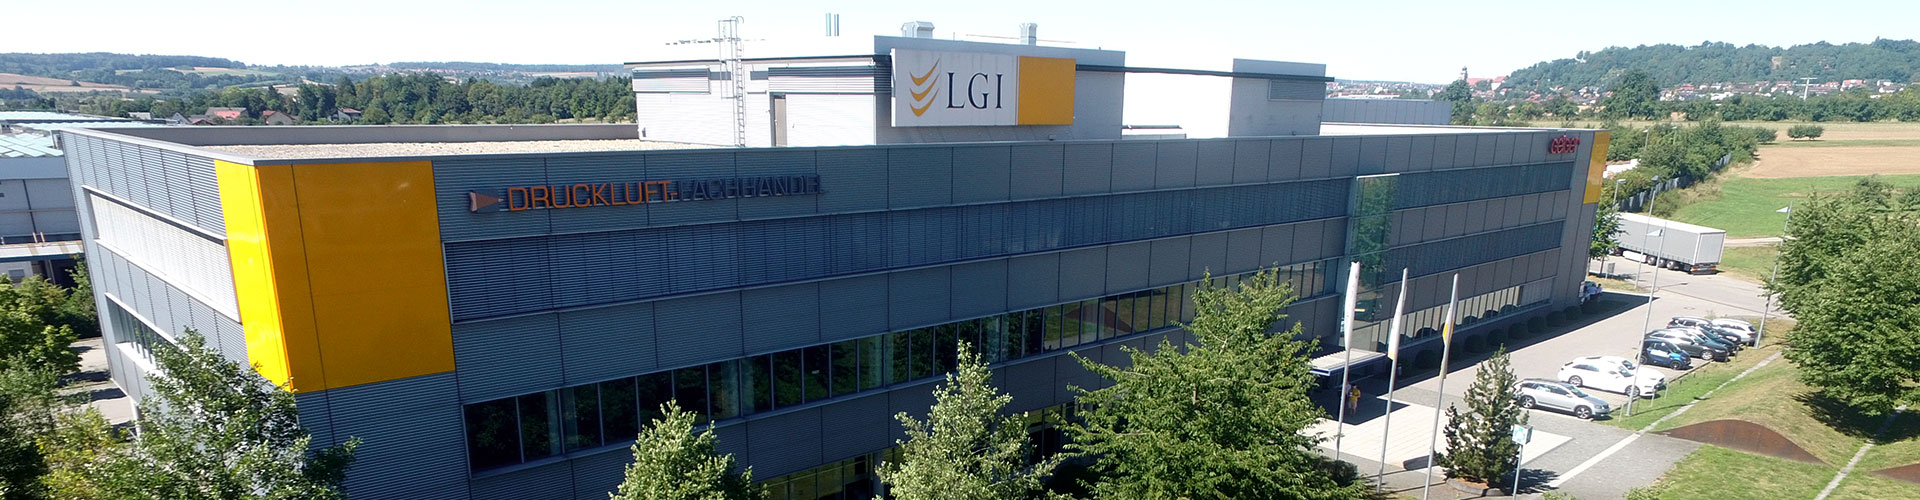 LGI building